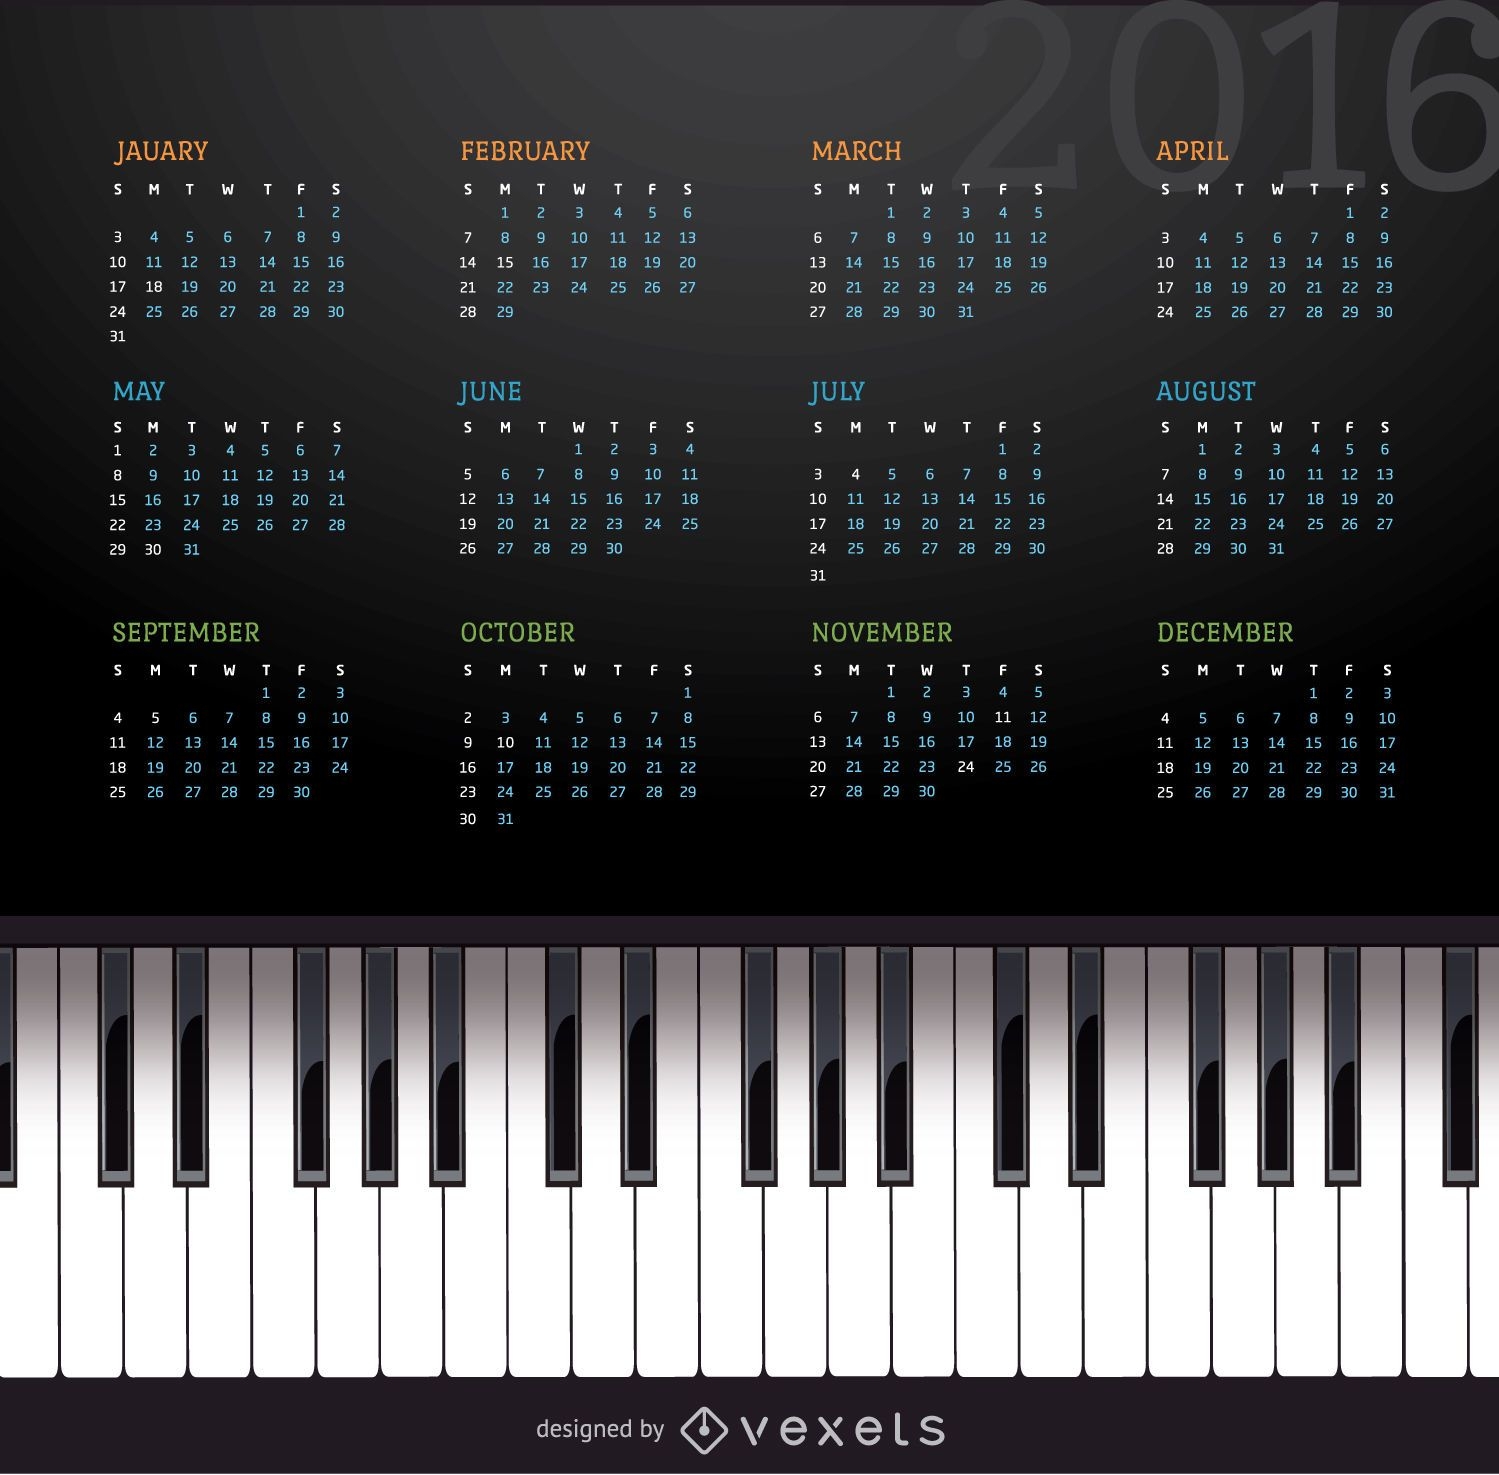 Klavierkalender 2016